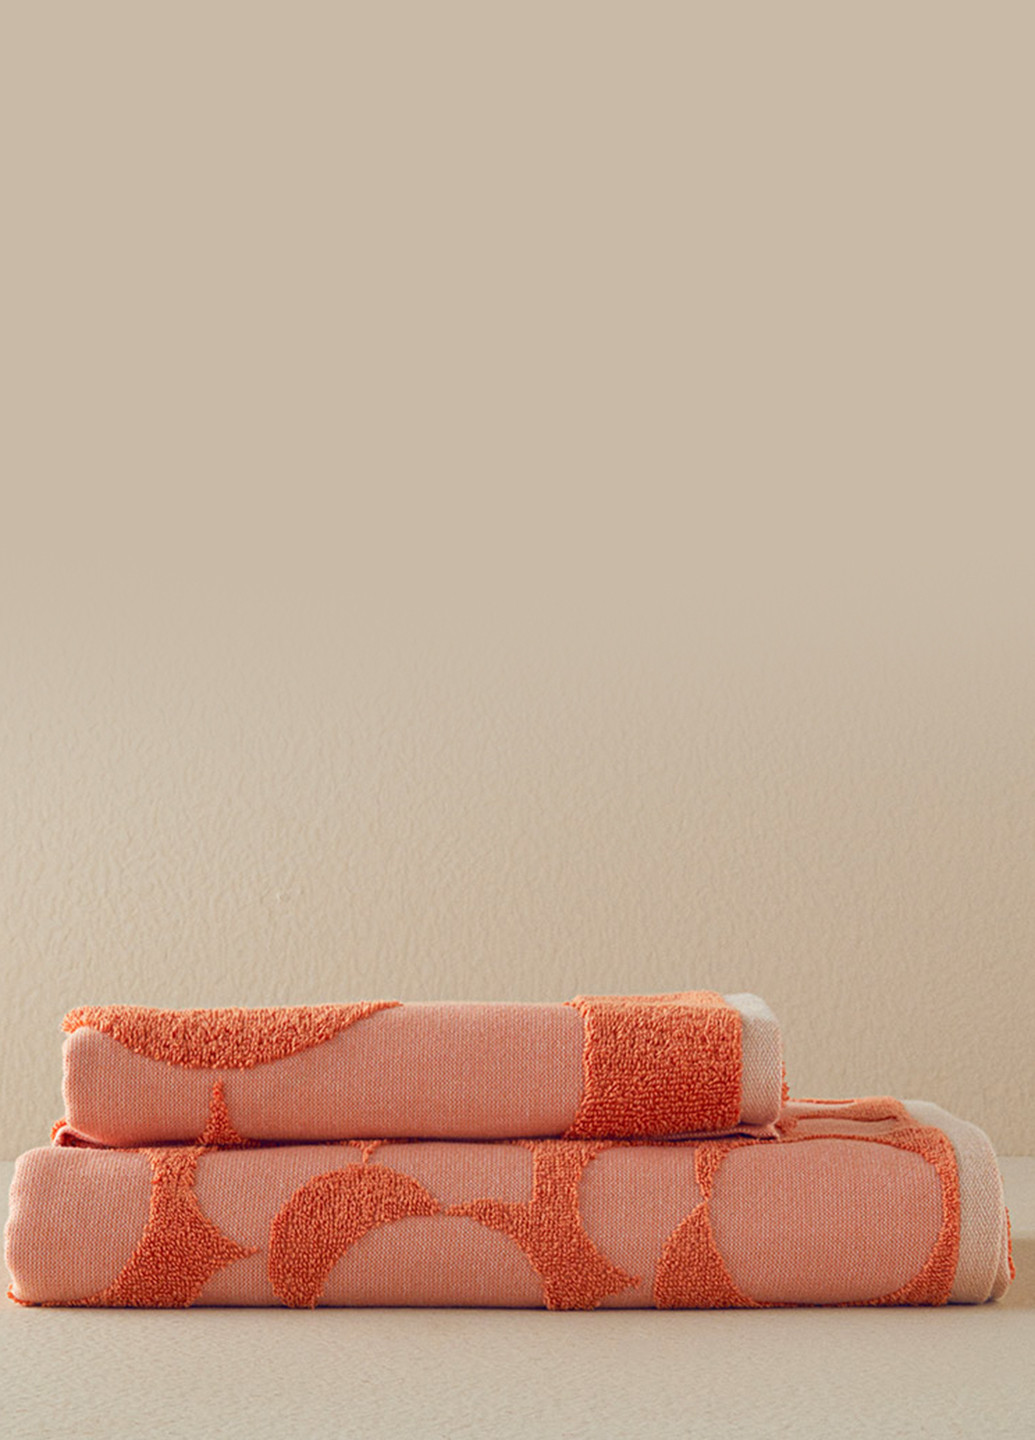 English Home полотенце, 50х80 см однотонный оранжевый производство - Турция